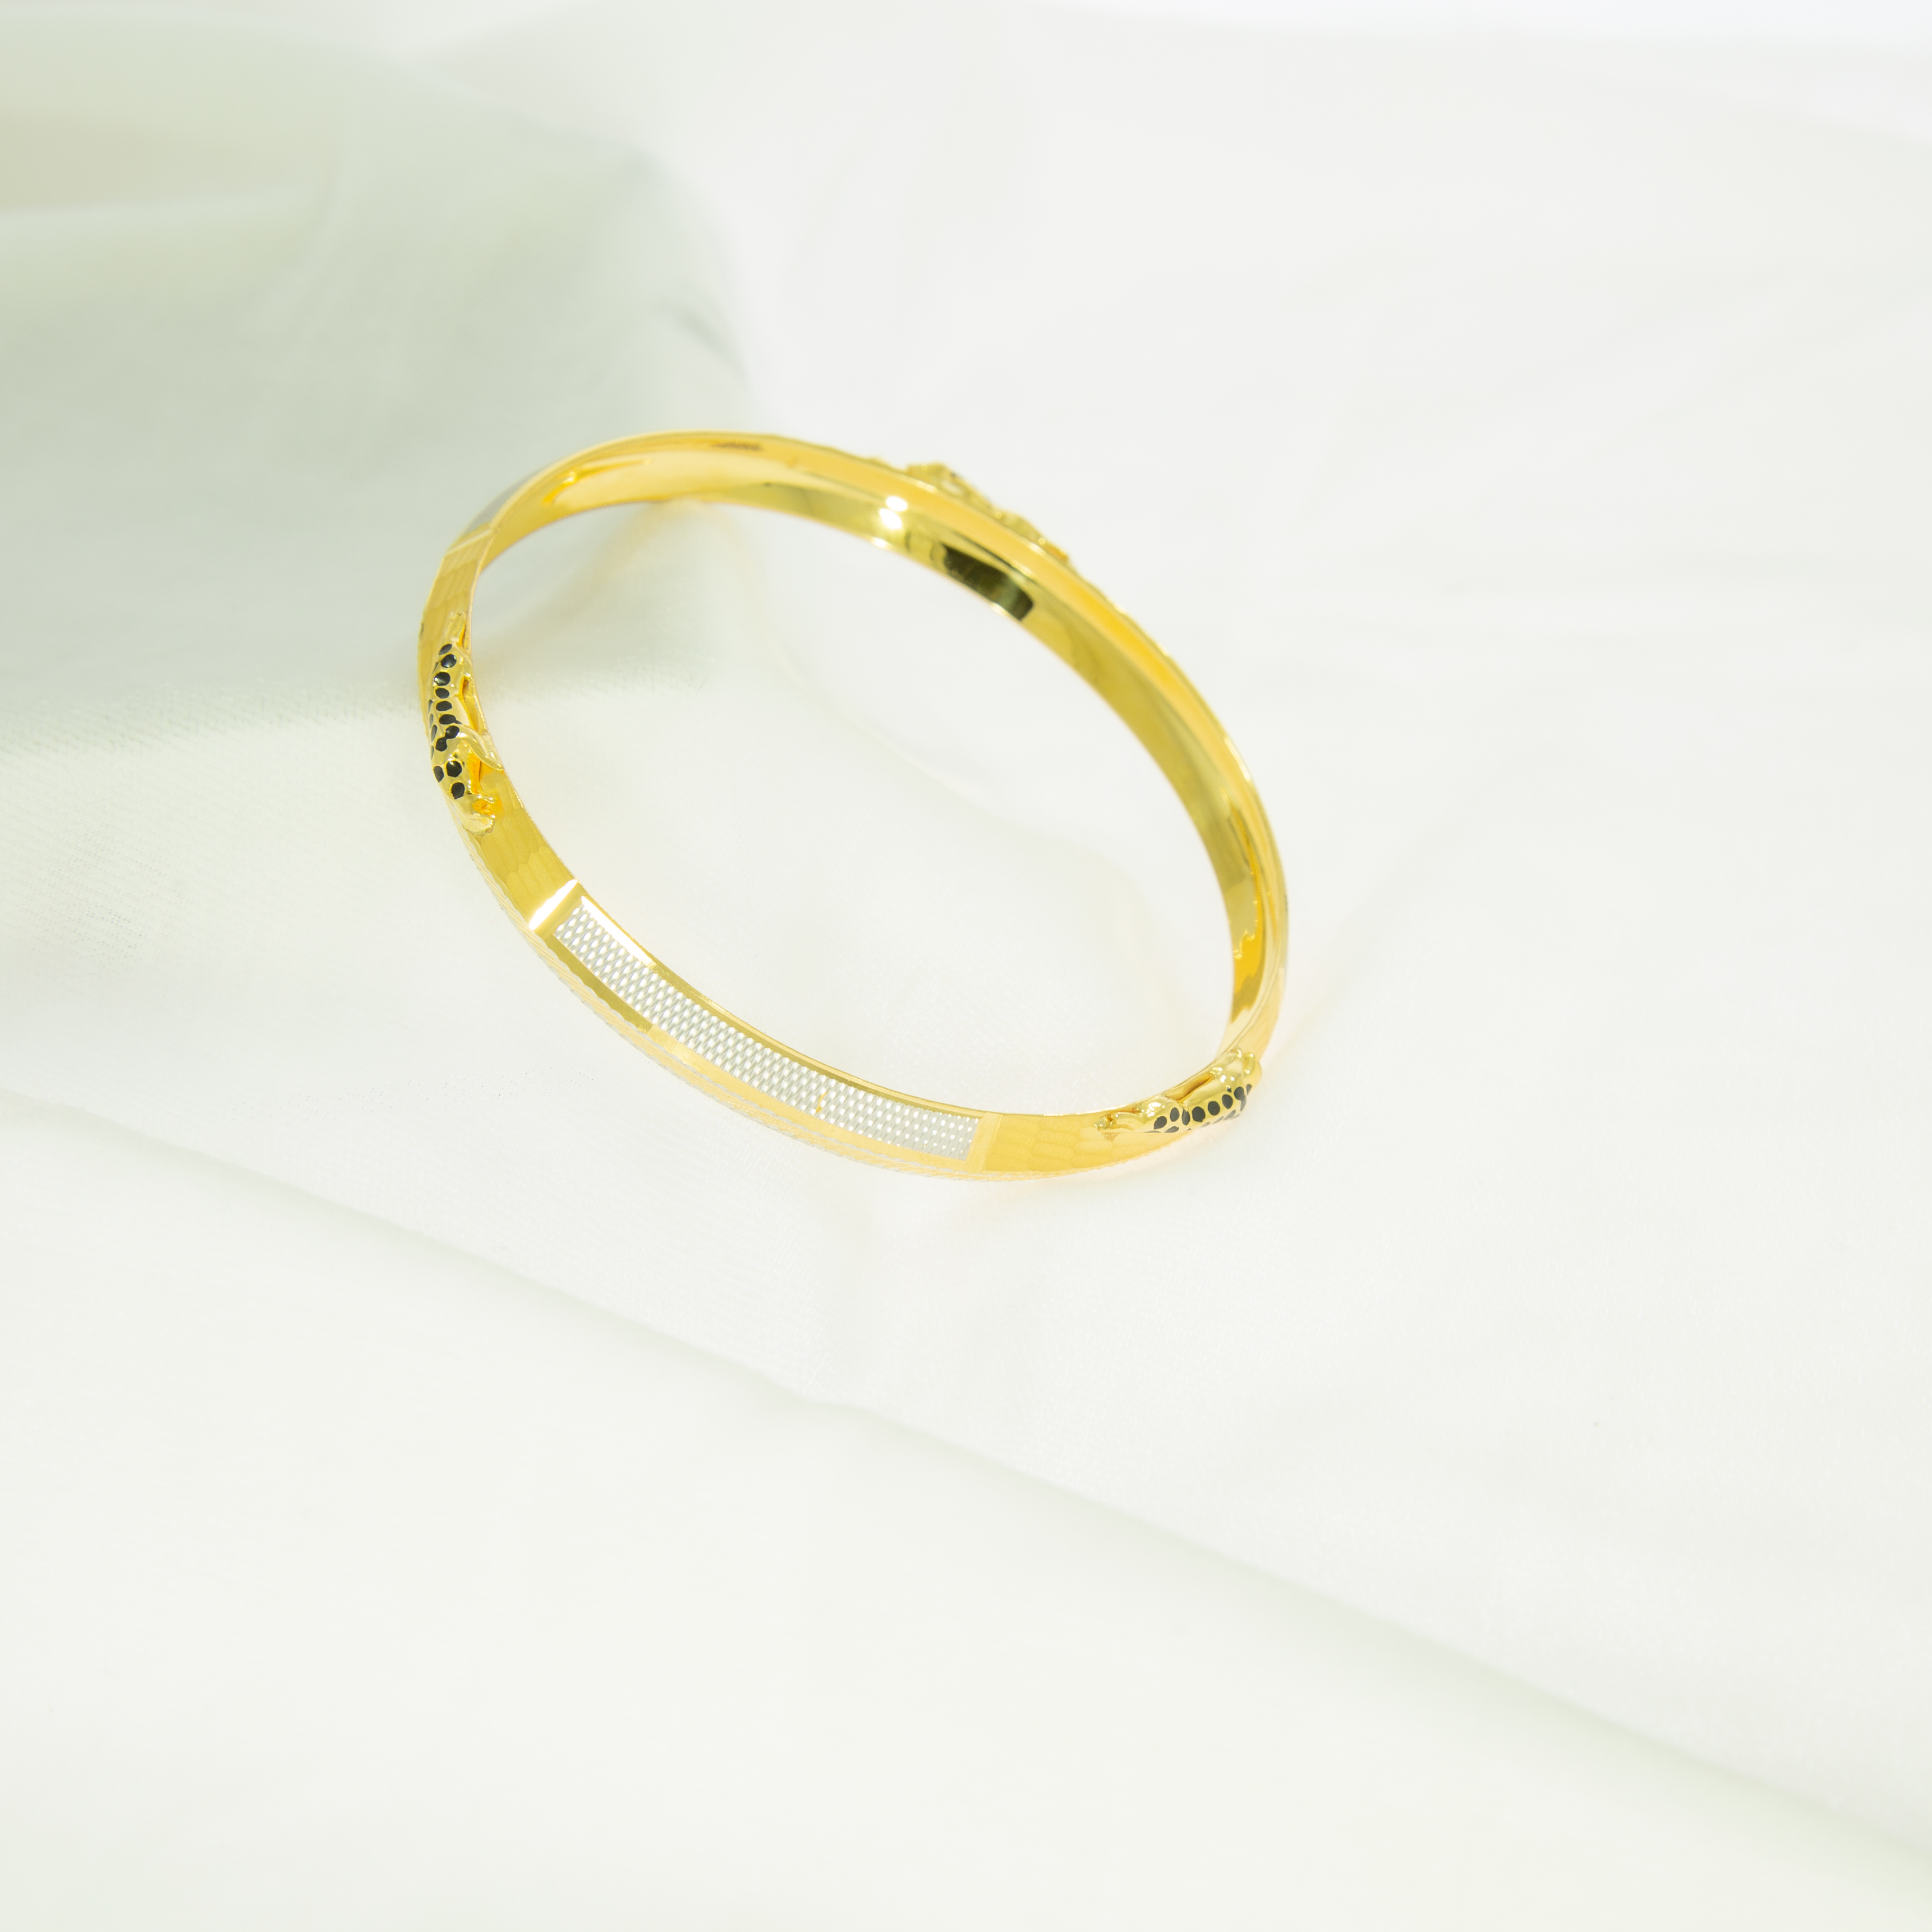 Buy Jaguar Bracelet For Man Online  Rishabh Jewellers  JewelFlix